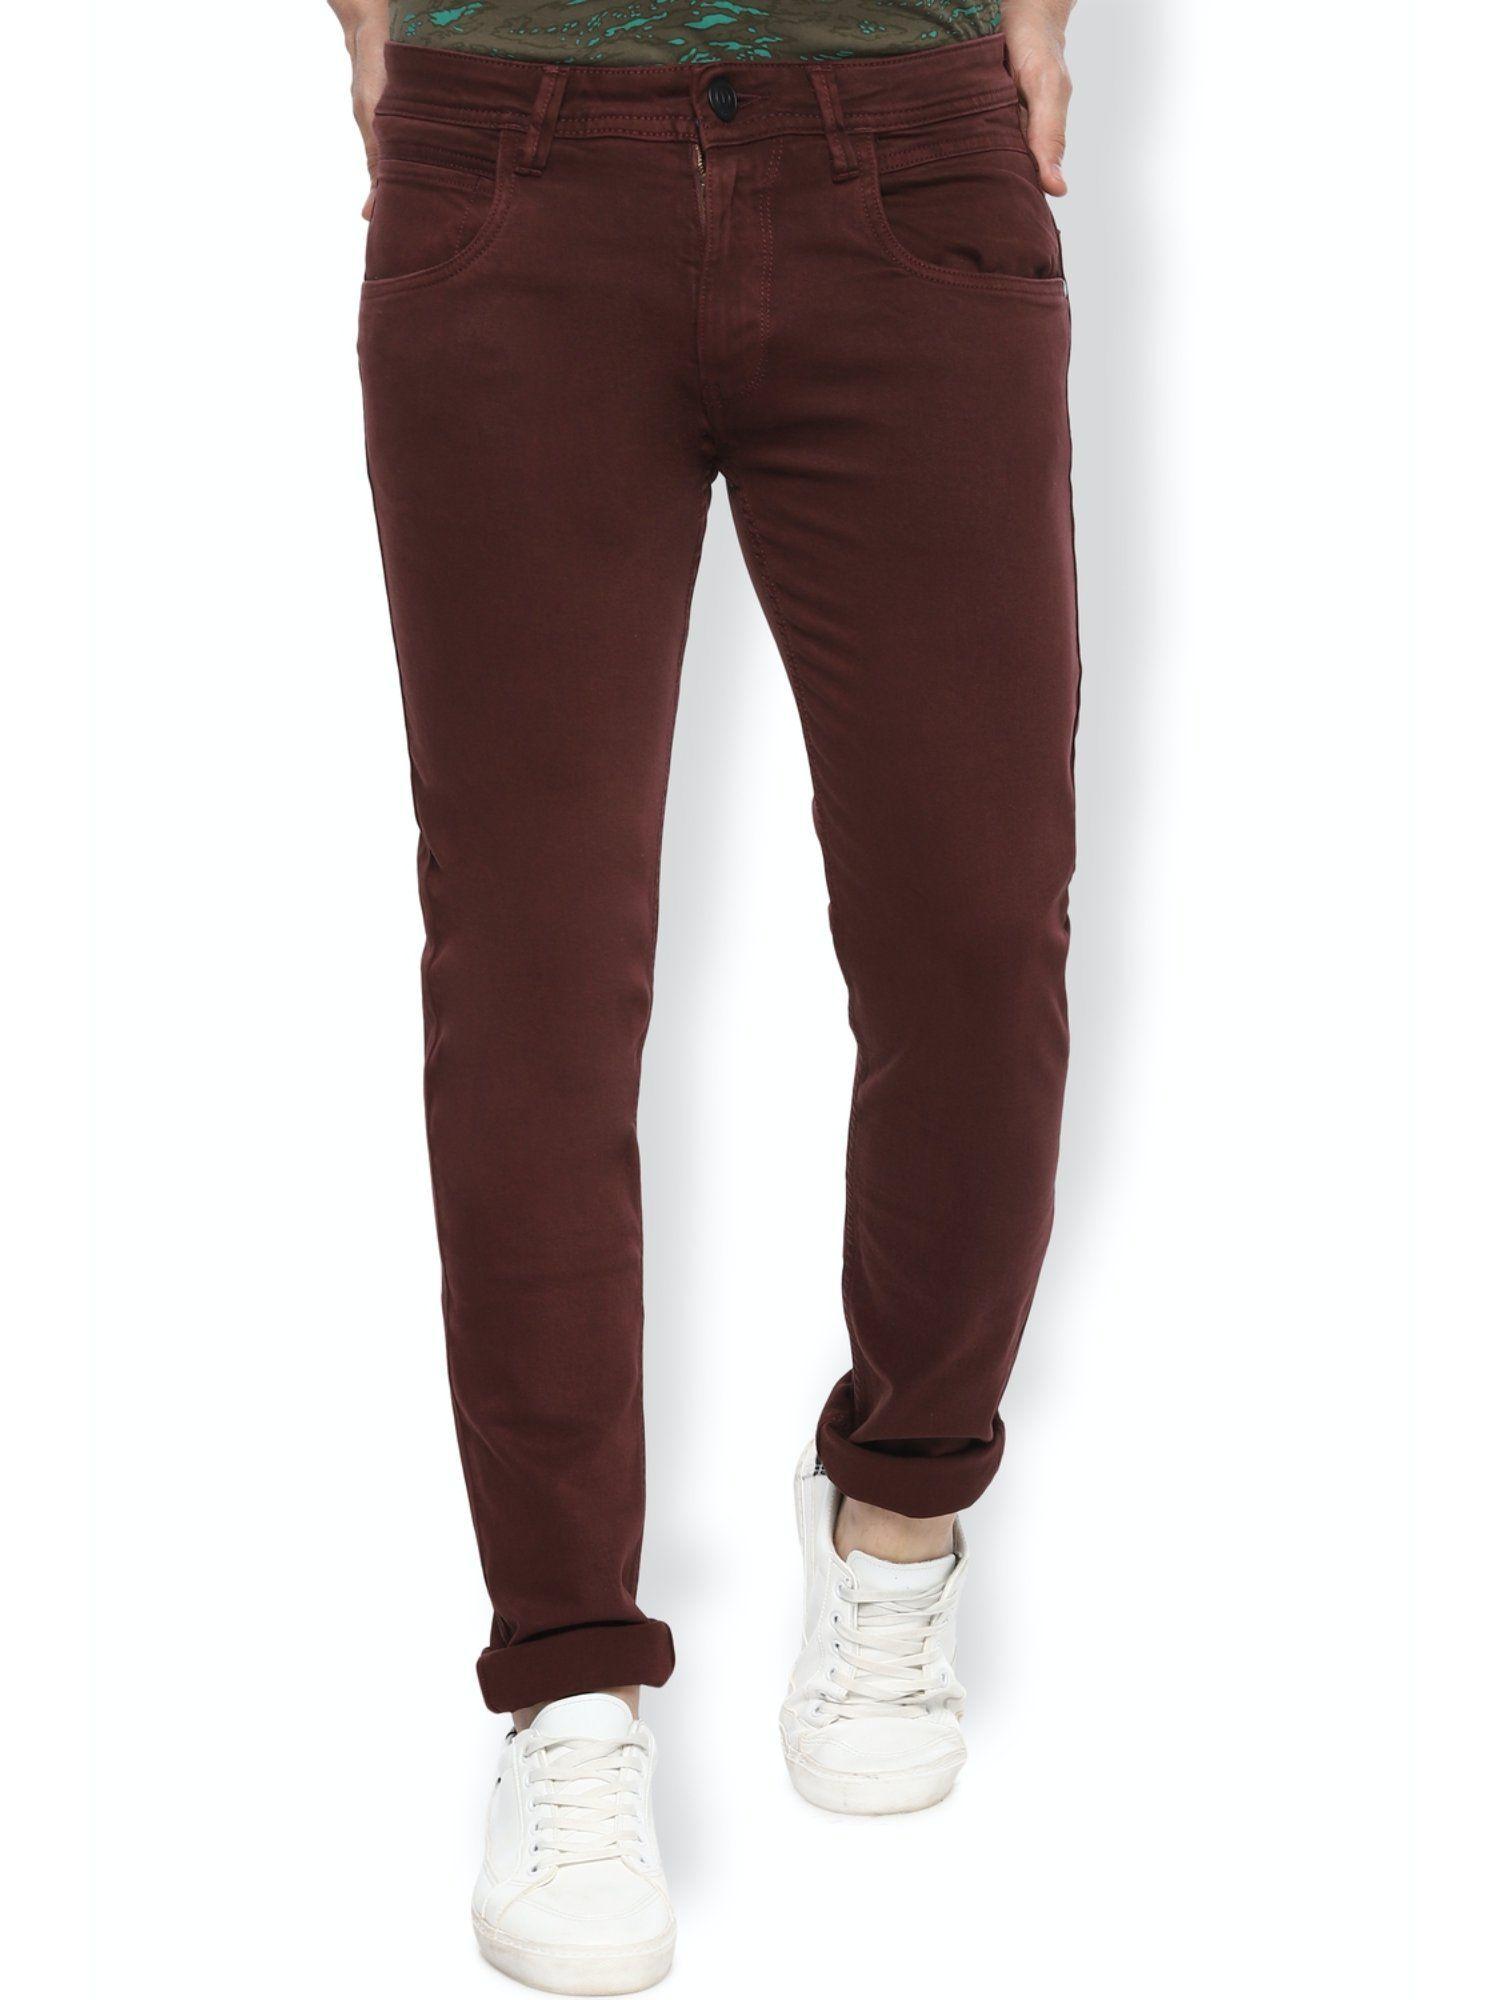 maroon-jeans